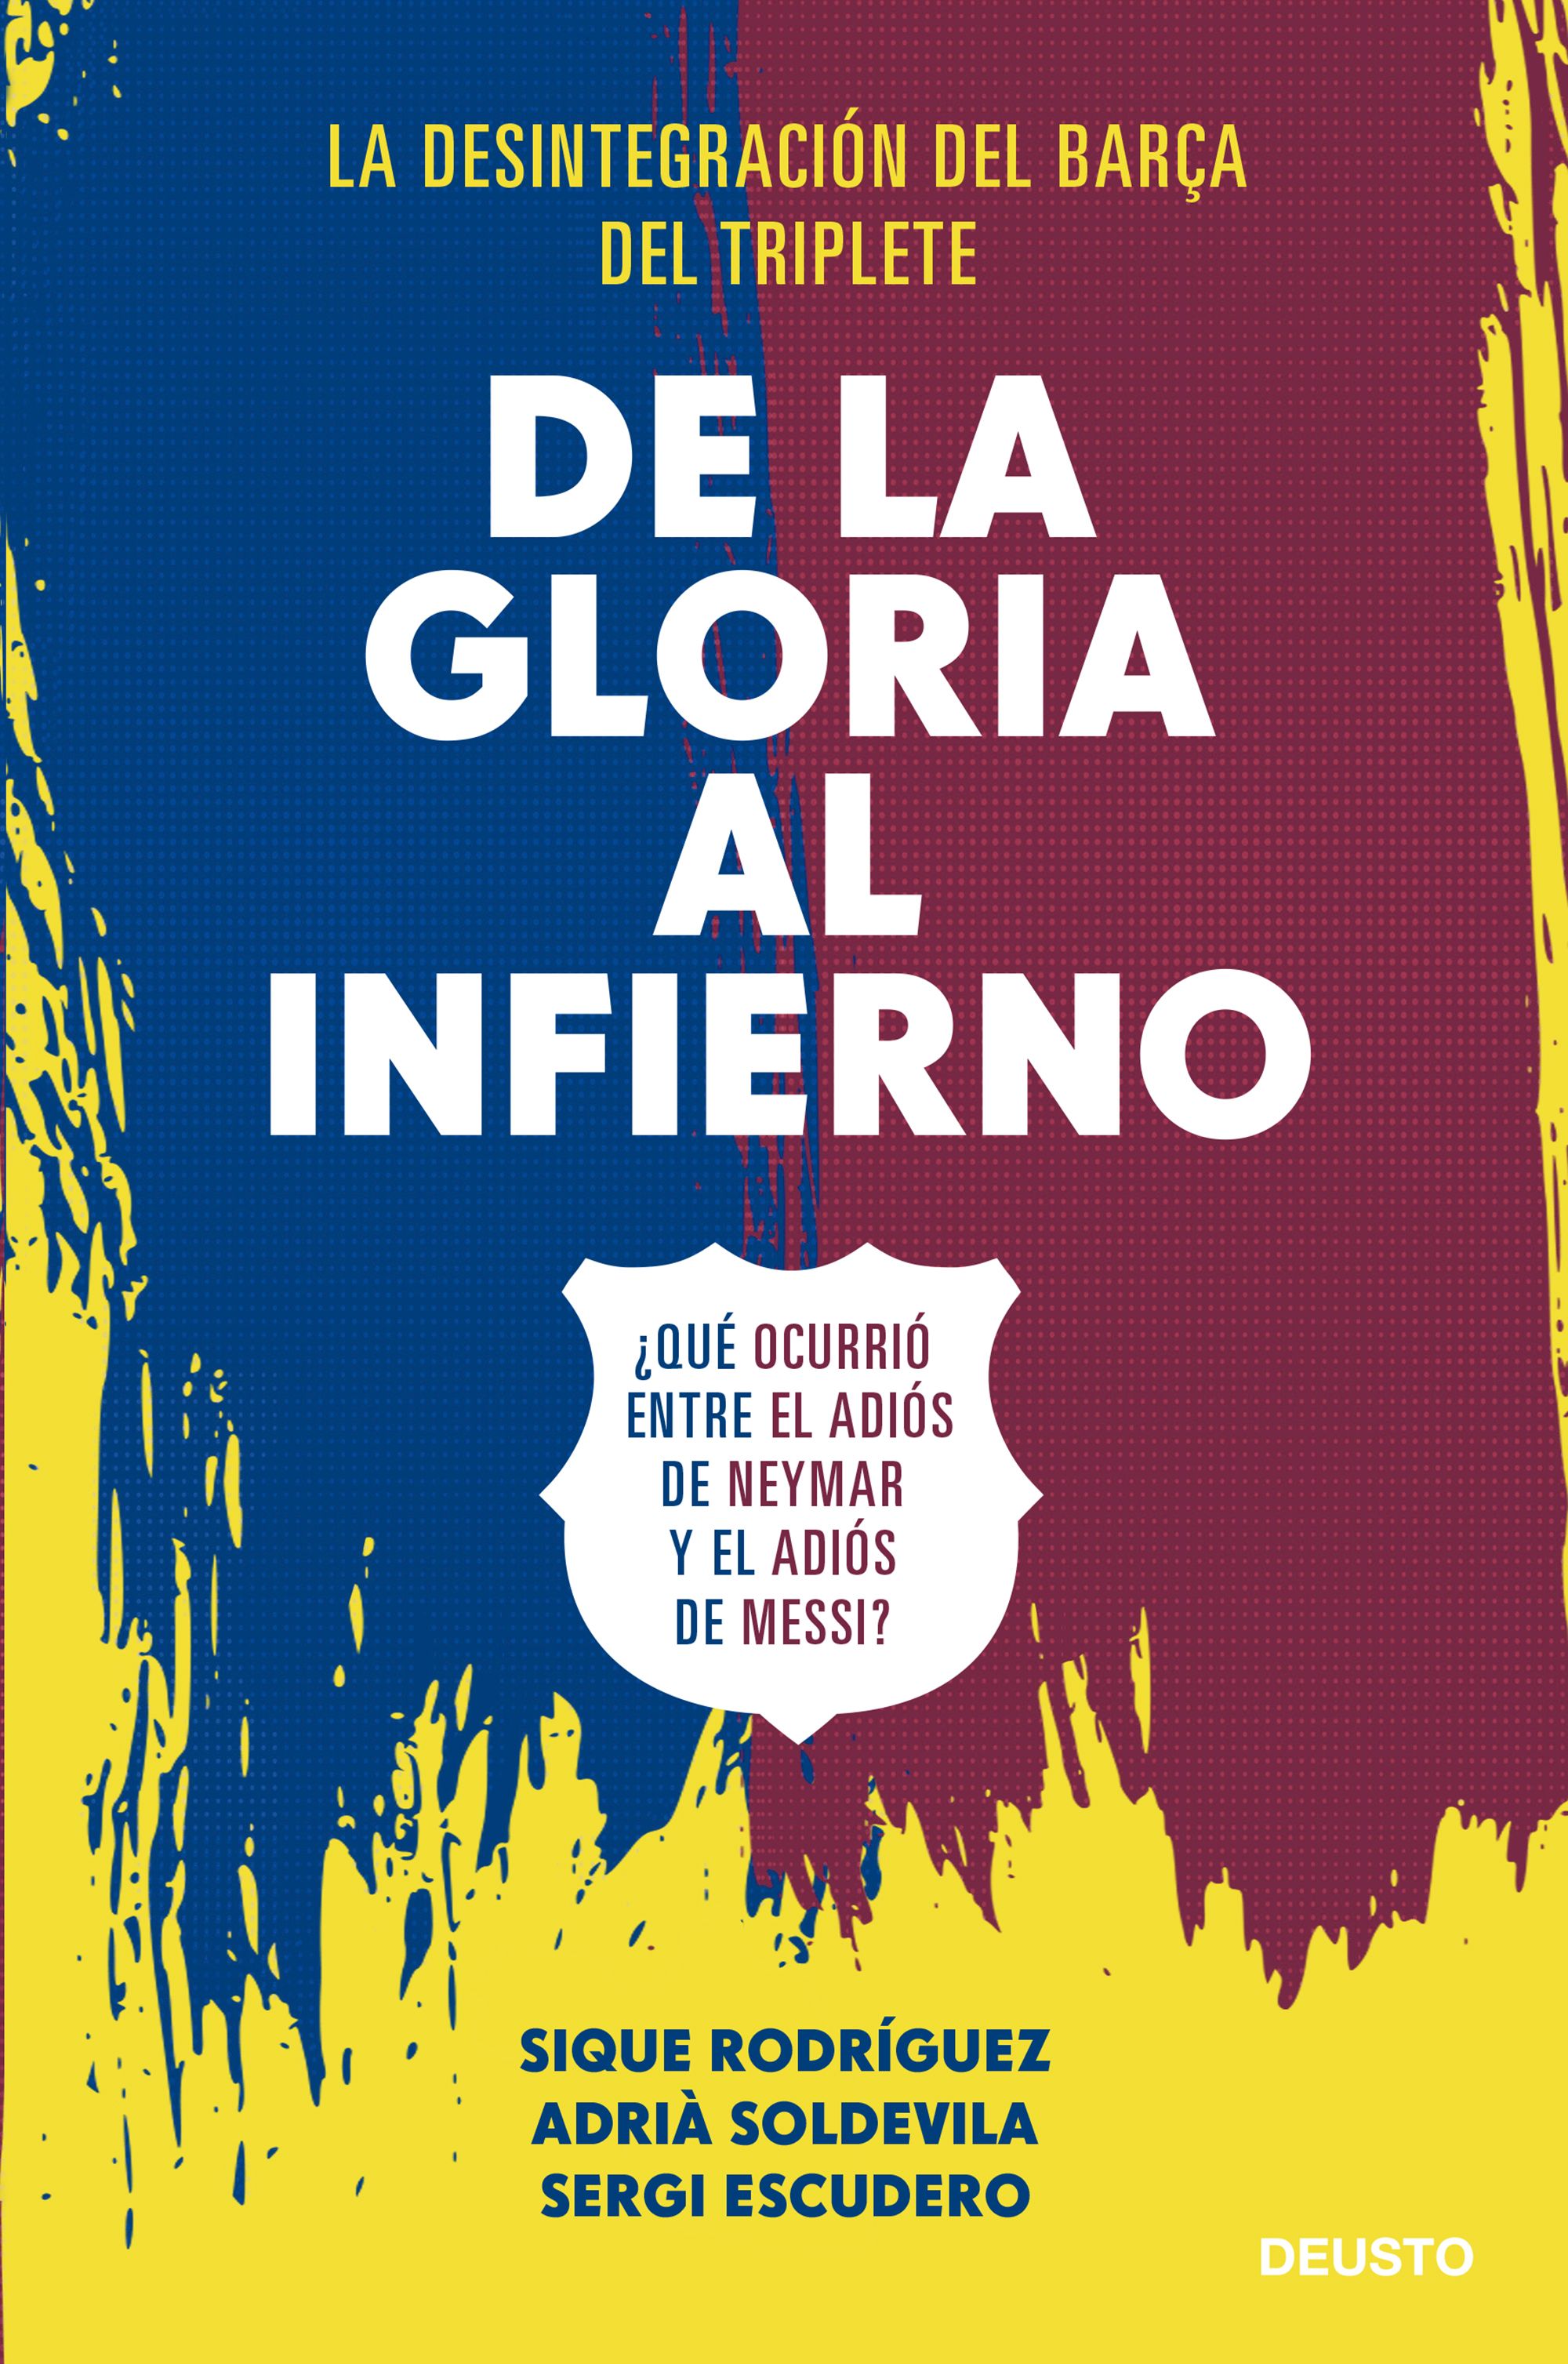 De la gloria al infierno (Ediciones Deusto, 2022), de Sique Rodríguez, Adrià Soldevila i Sergi Escudero